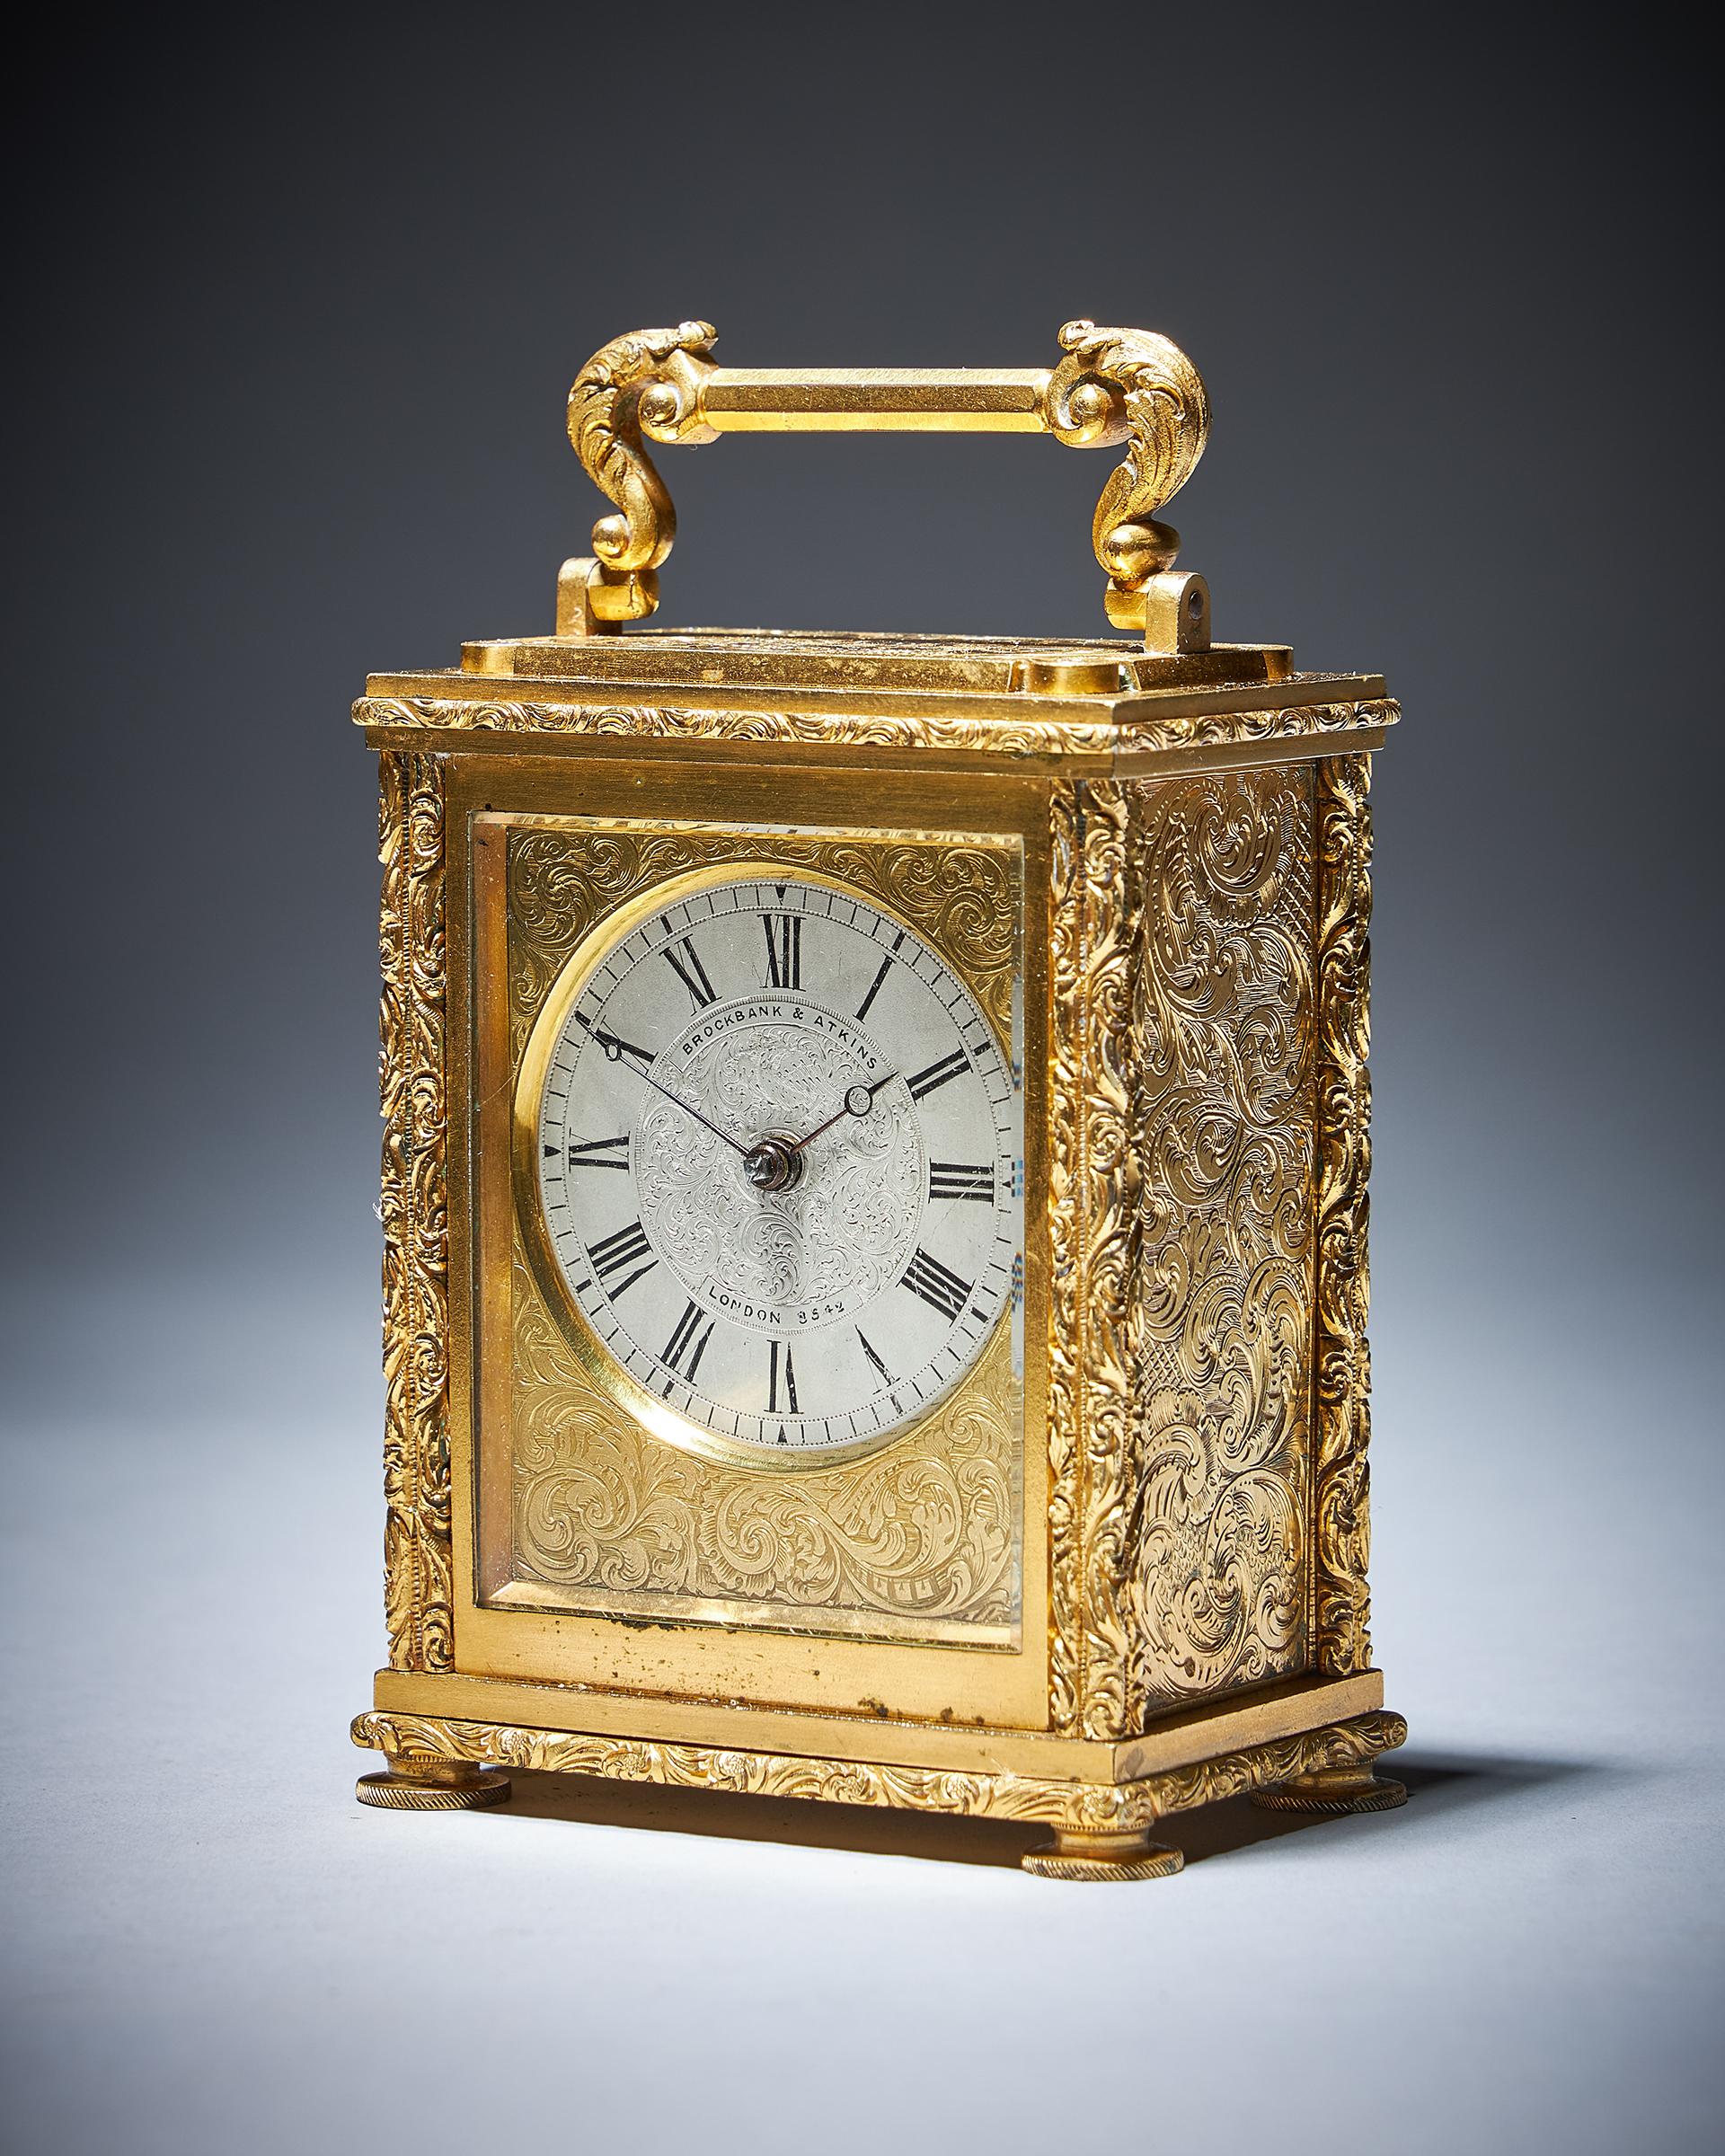 Very Rare English Carriage Clock Signed Brockbank & Atkins London 1